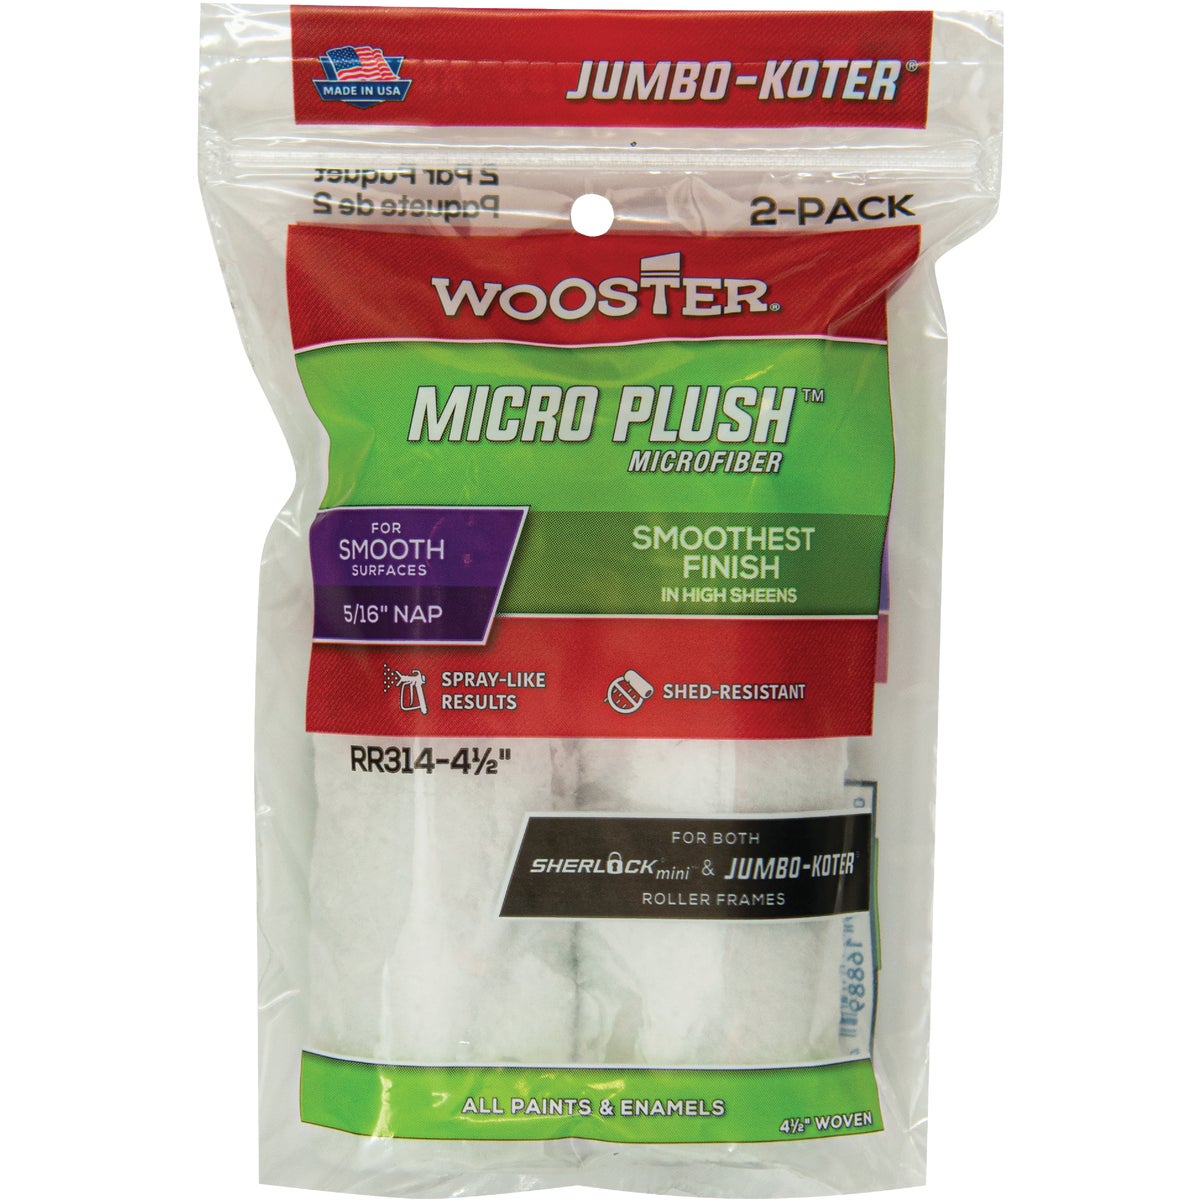 Wooster Jumbo-Koter 4-1/2 In. x 5/16 In. Micro Plush Mini Microfiber Roller Cover (2-Pack)